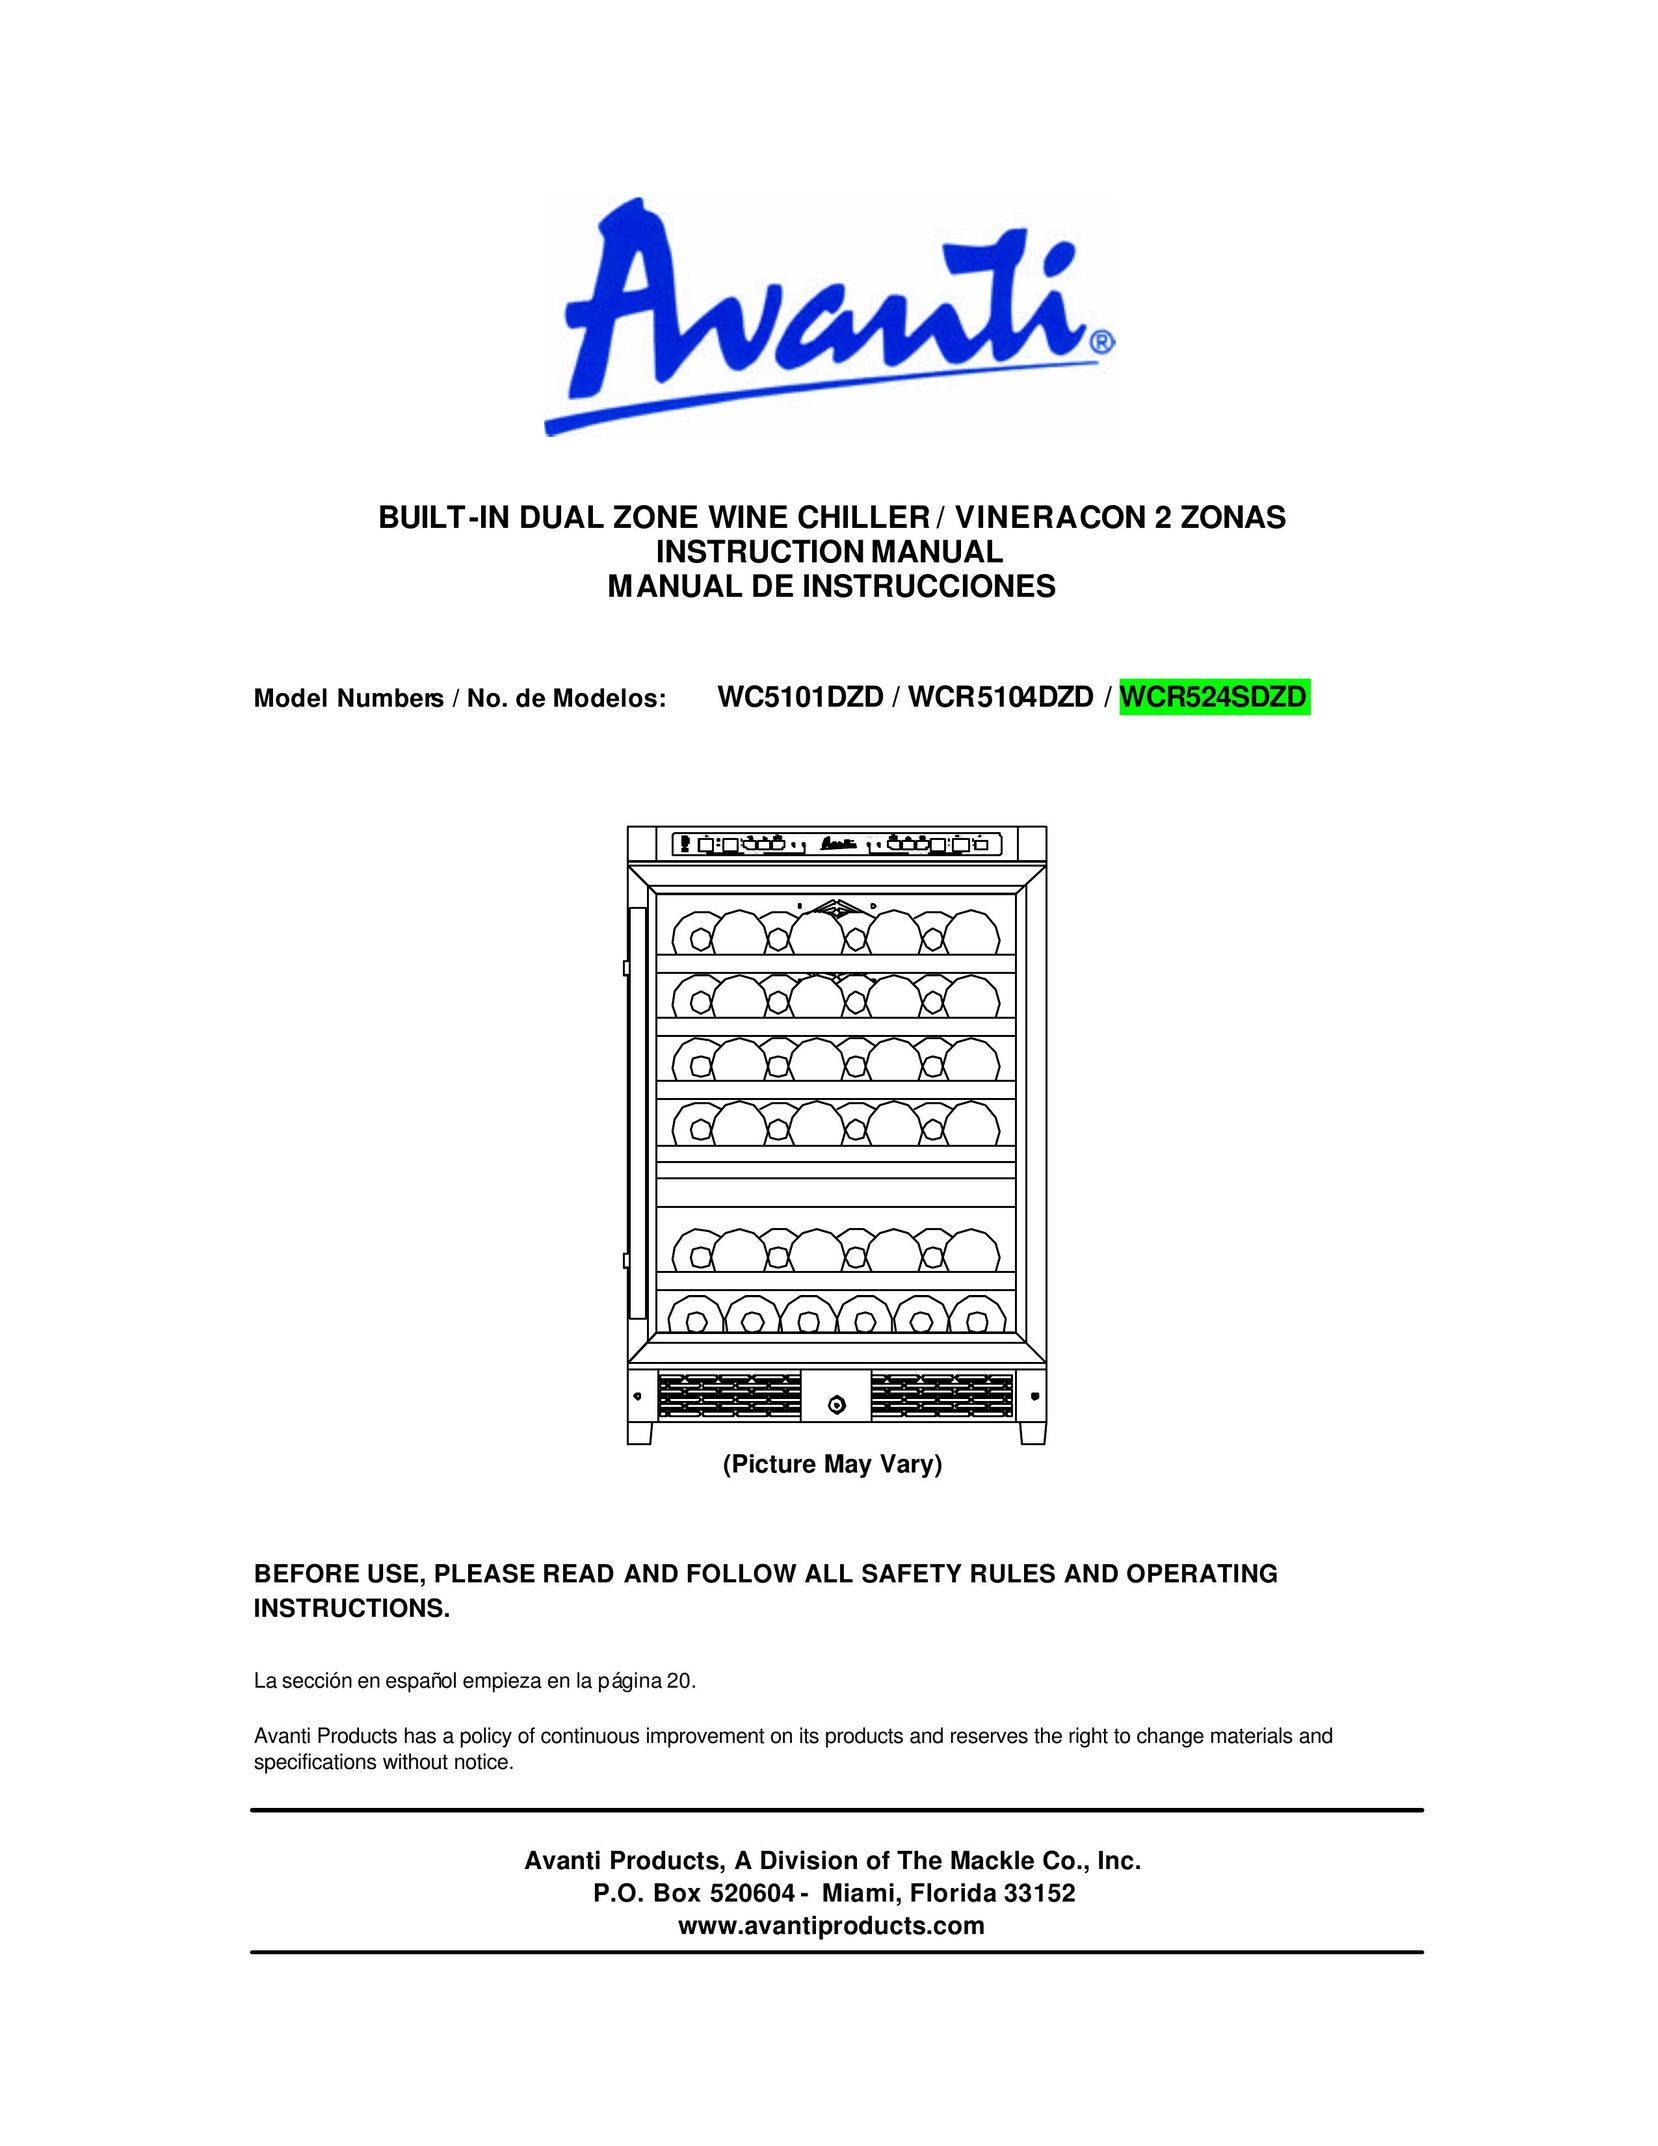 Avanti WCR524SDZD, WCR5104DZD, WC5101DZD Beverage Dispenser User Manual (Page 1)